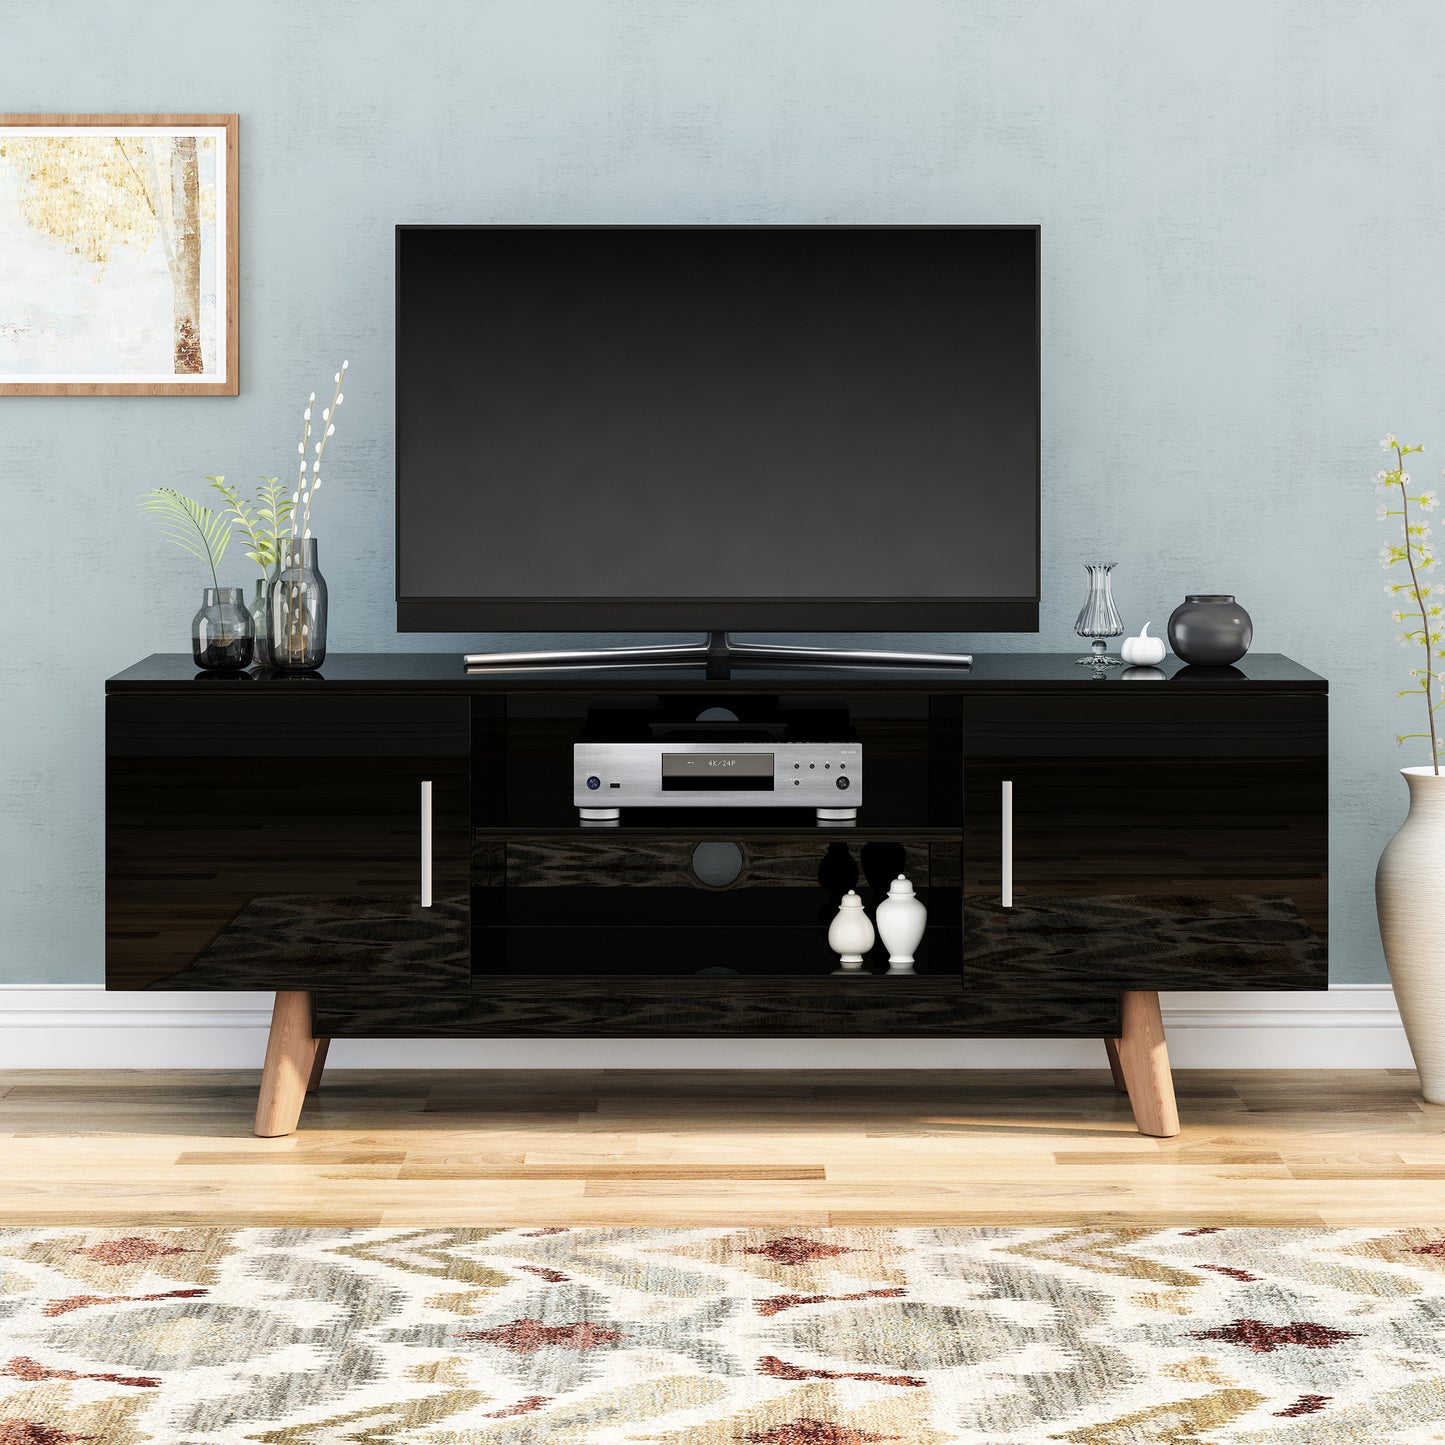 Rubani Mid Century Modern 2 Cabinets & Shelves TV Stand